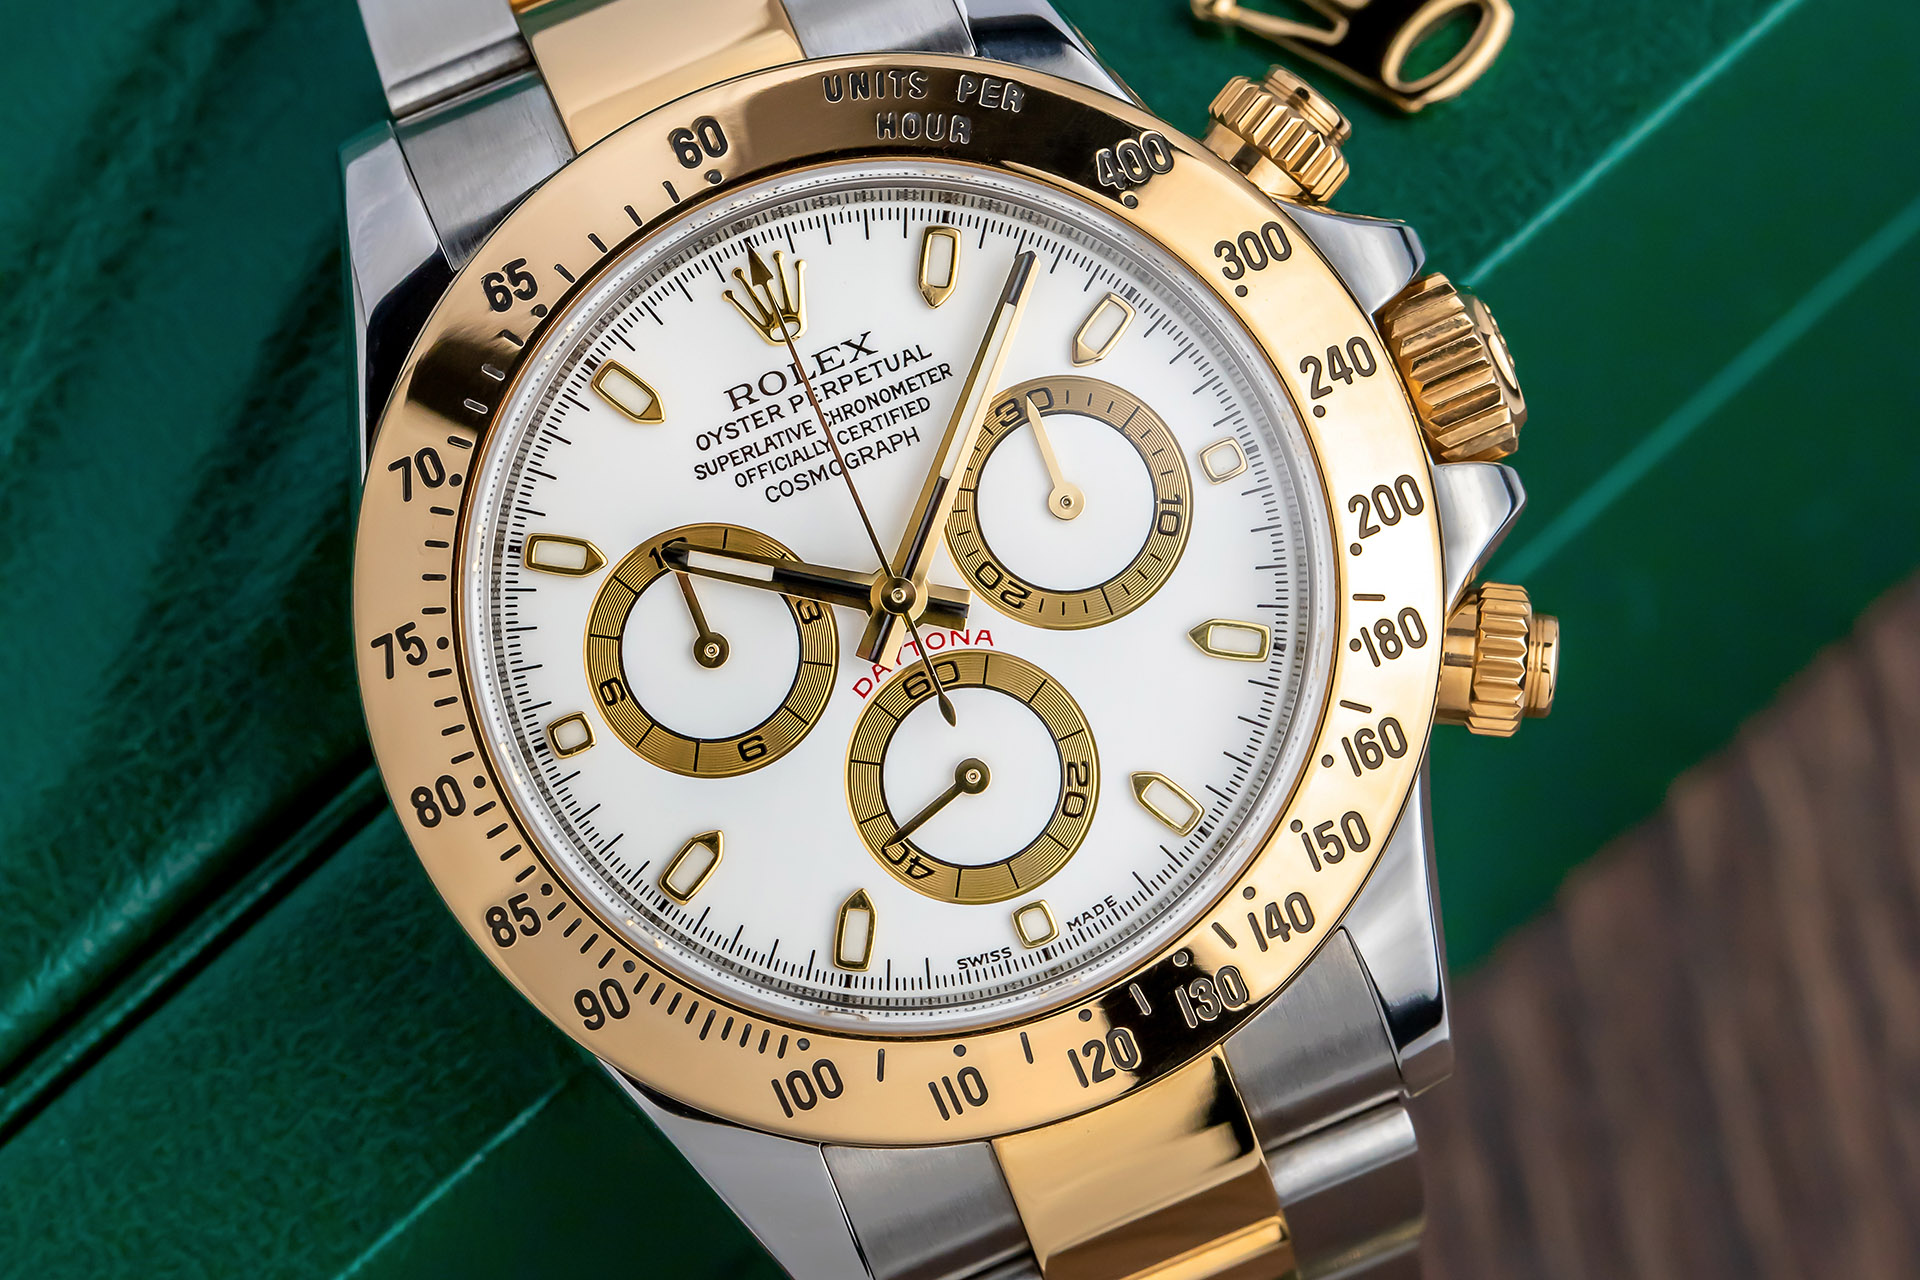 Top 10 Most Popular Rolex Watch Models | vlr.eng.br